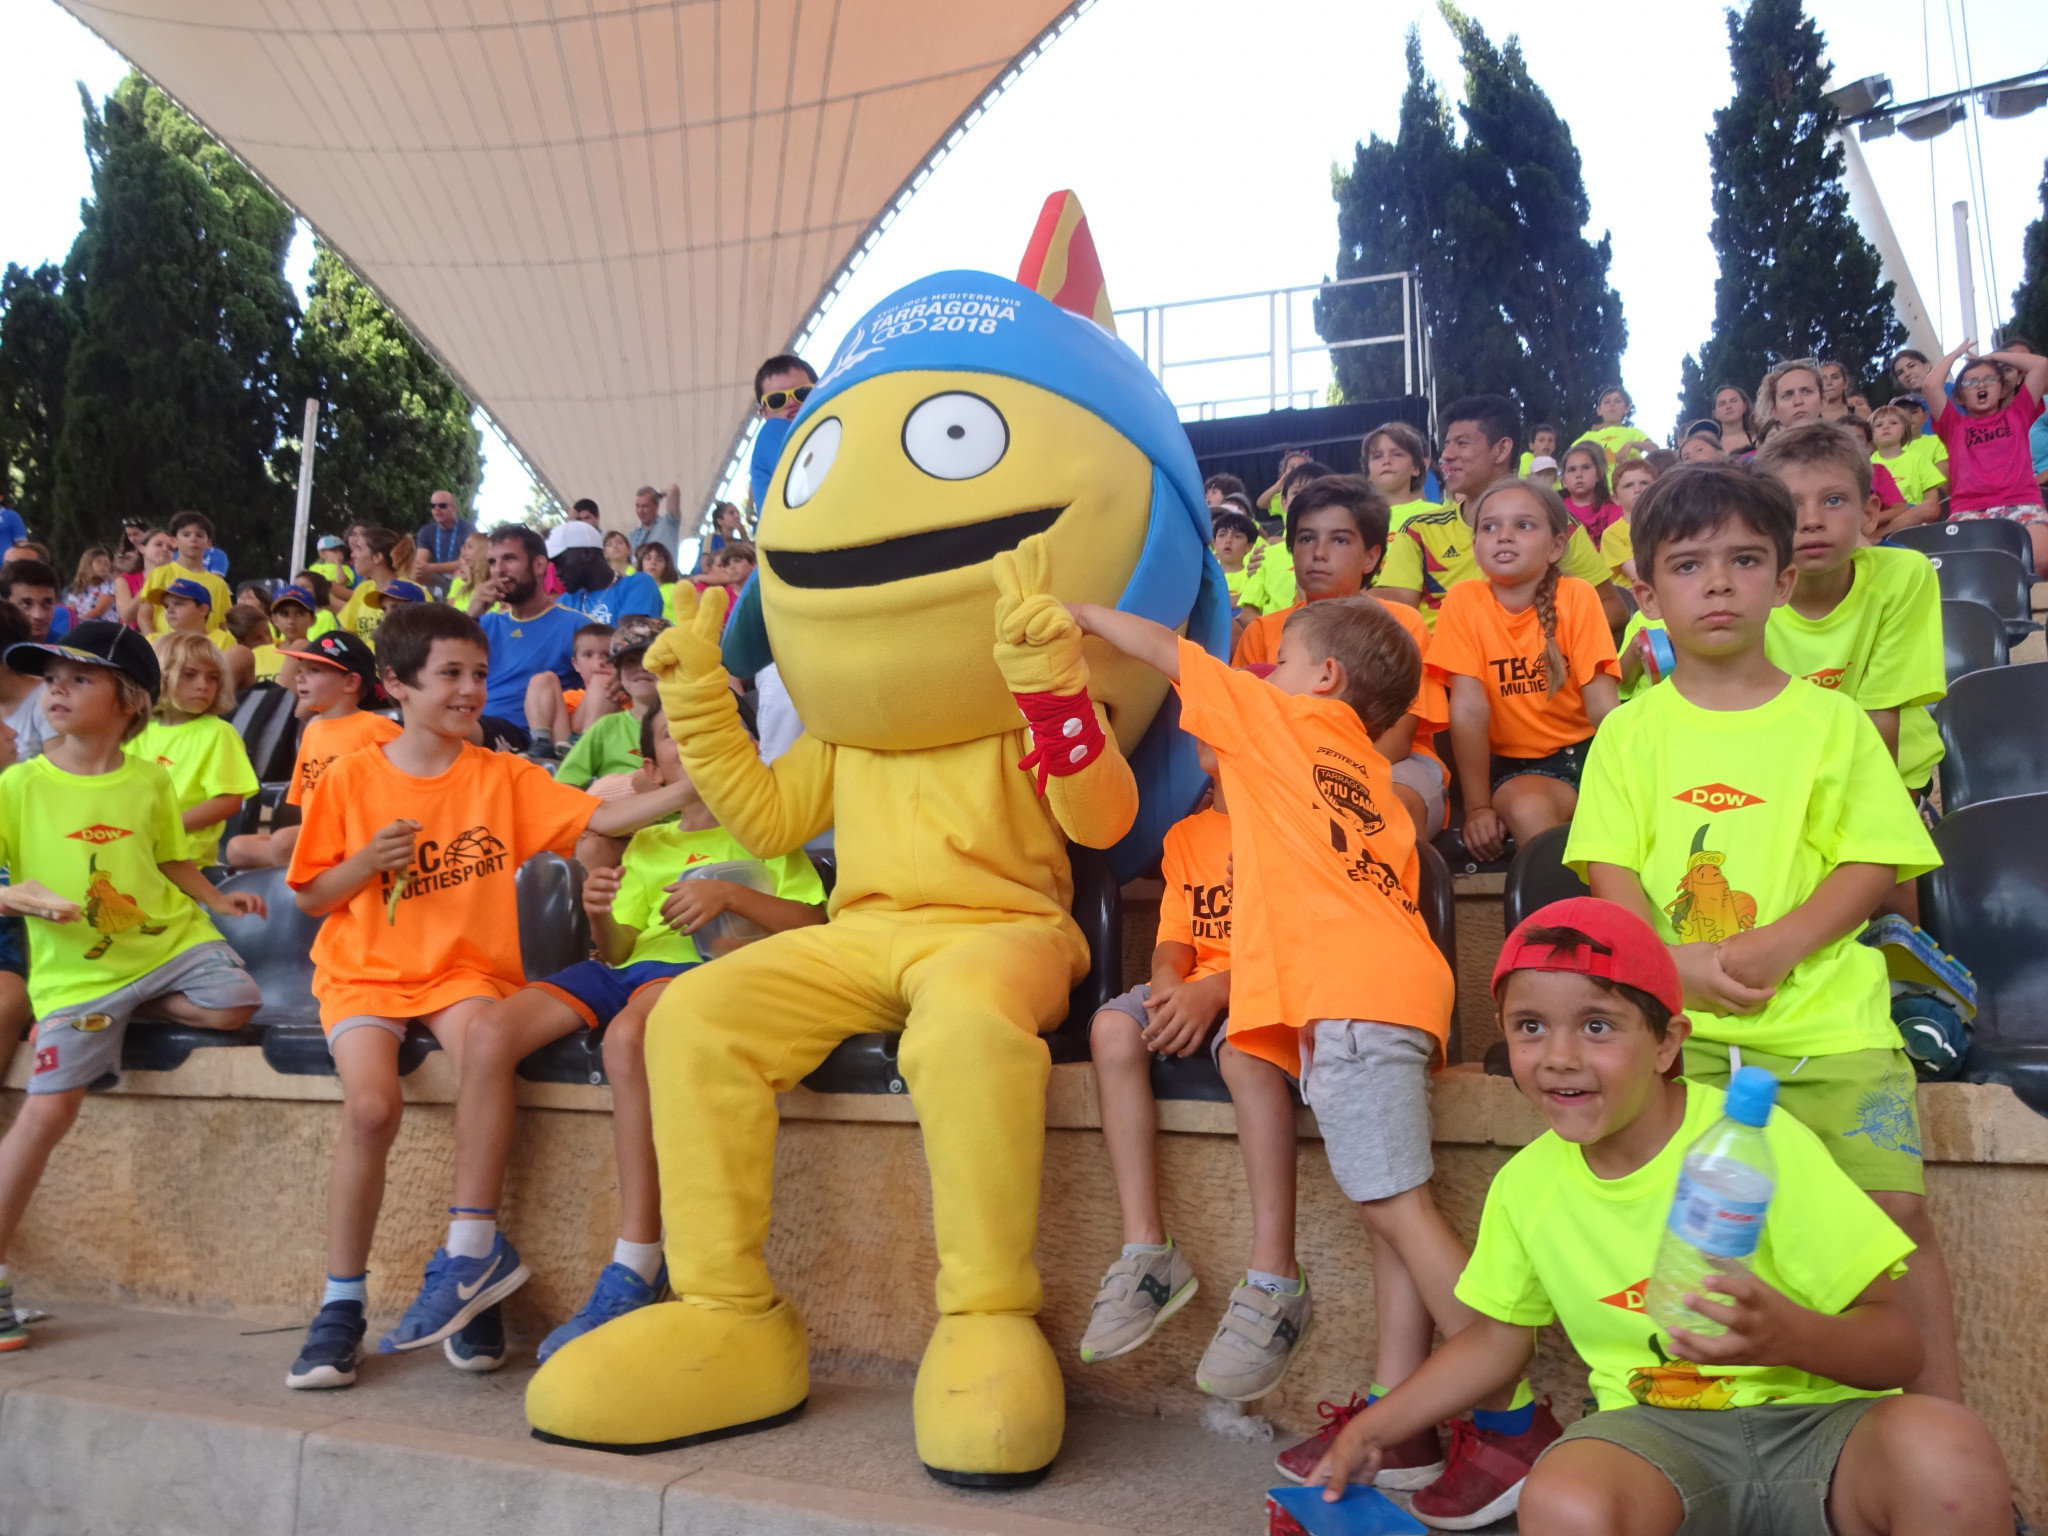 Tarragona 2018 mascot Tarracus was a popular visitor at the 3x3 basketball ©ITG